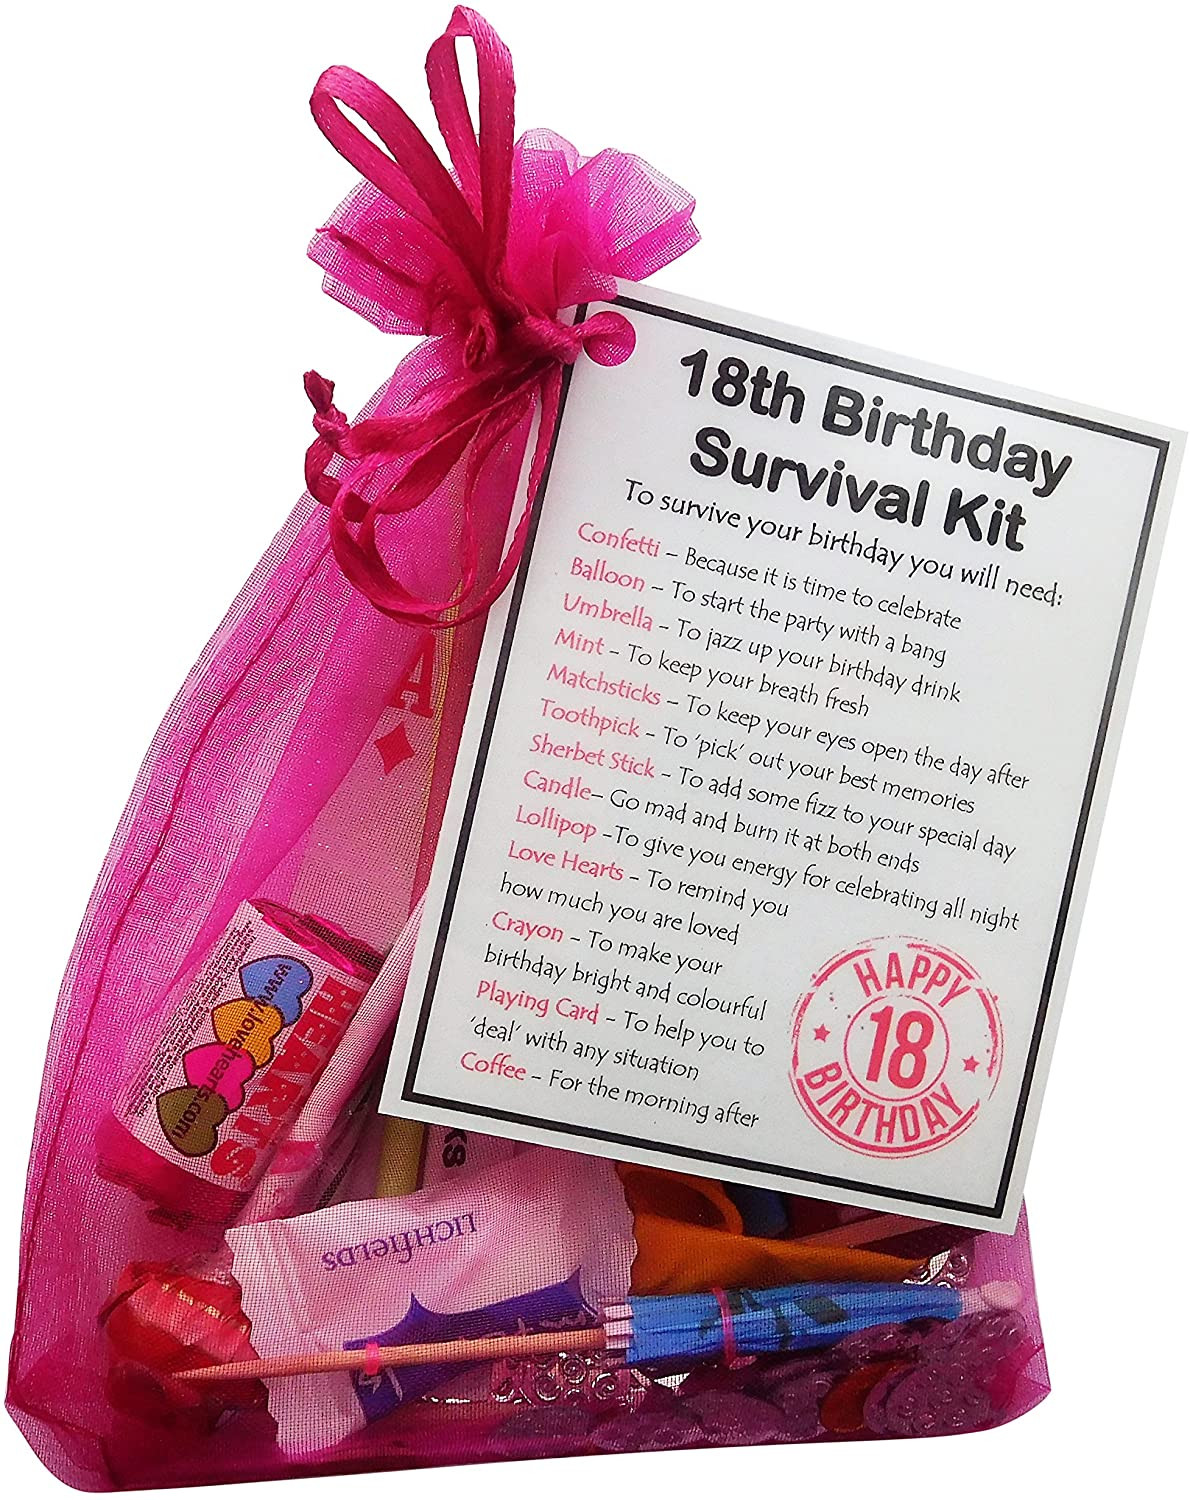 Girlfriend Gift Ideas Birthday
 18th Birthday Gift Ideas For Girlfriend Popular Century